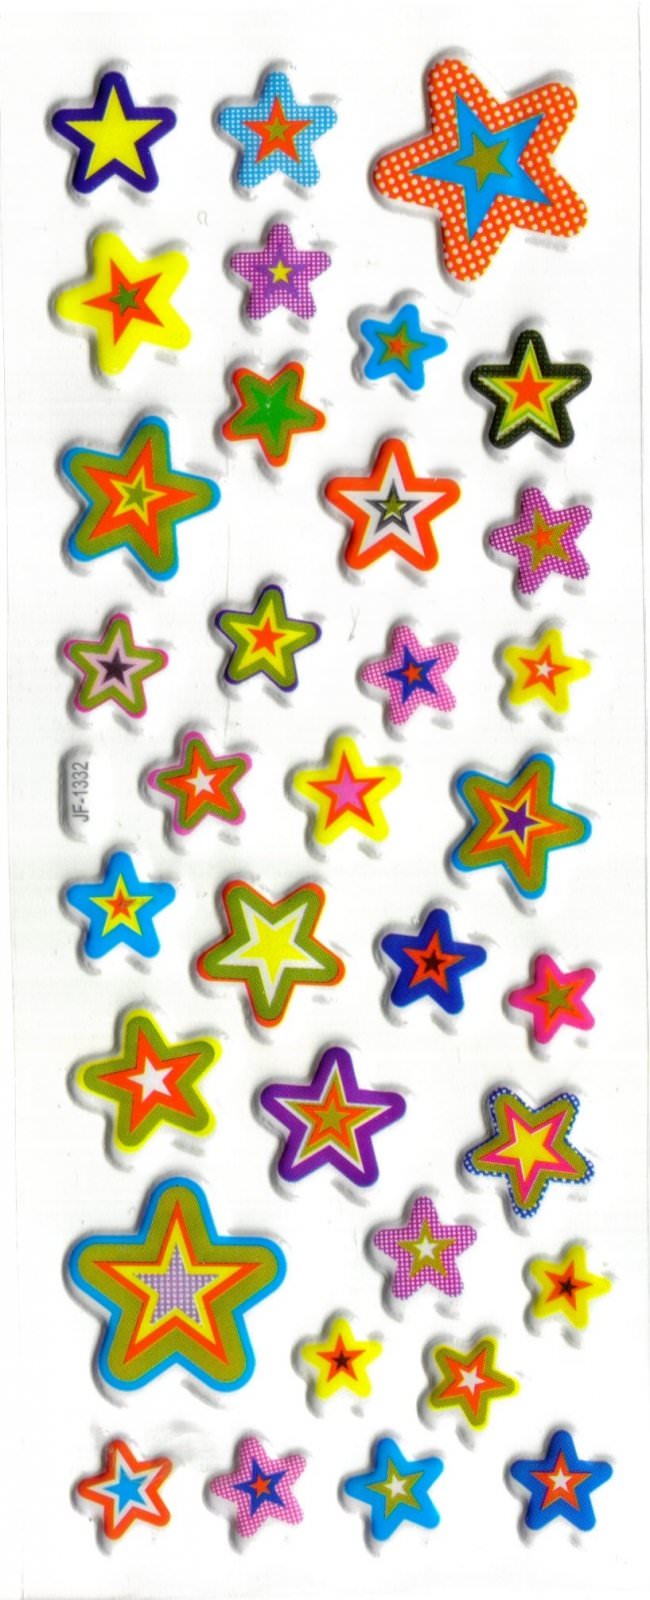 etoiles multicolores gommette adhesive sticker autocollante decoration scrapbooking rigide JF 1332